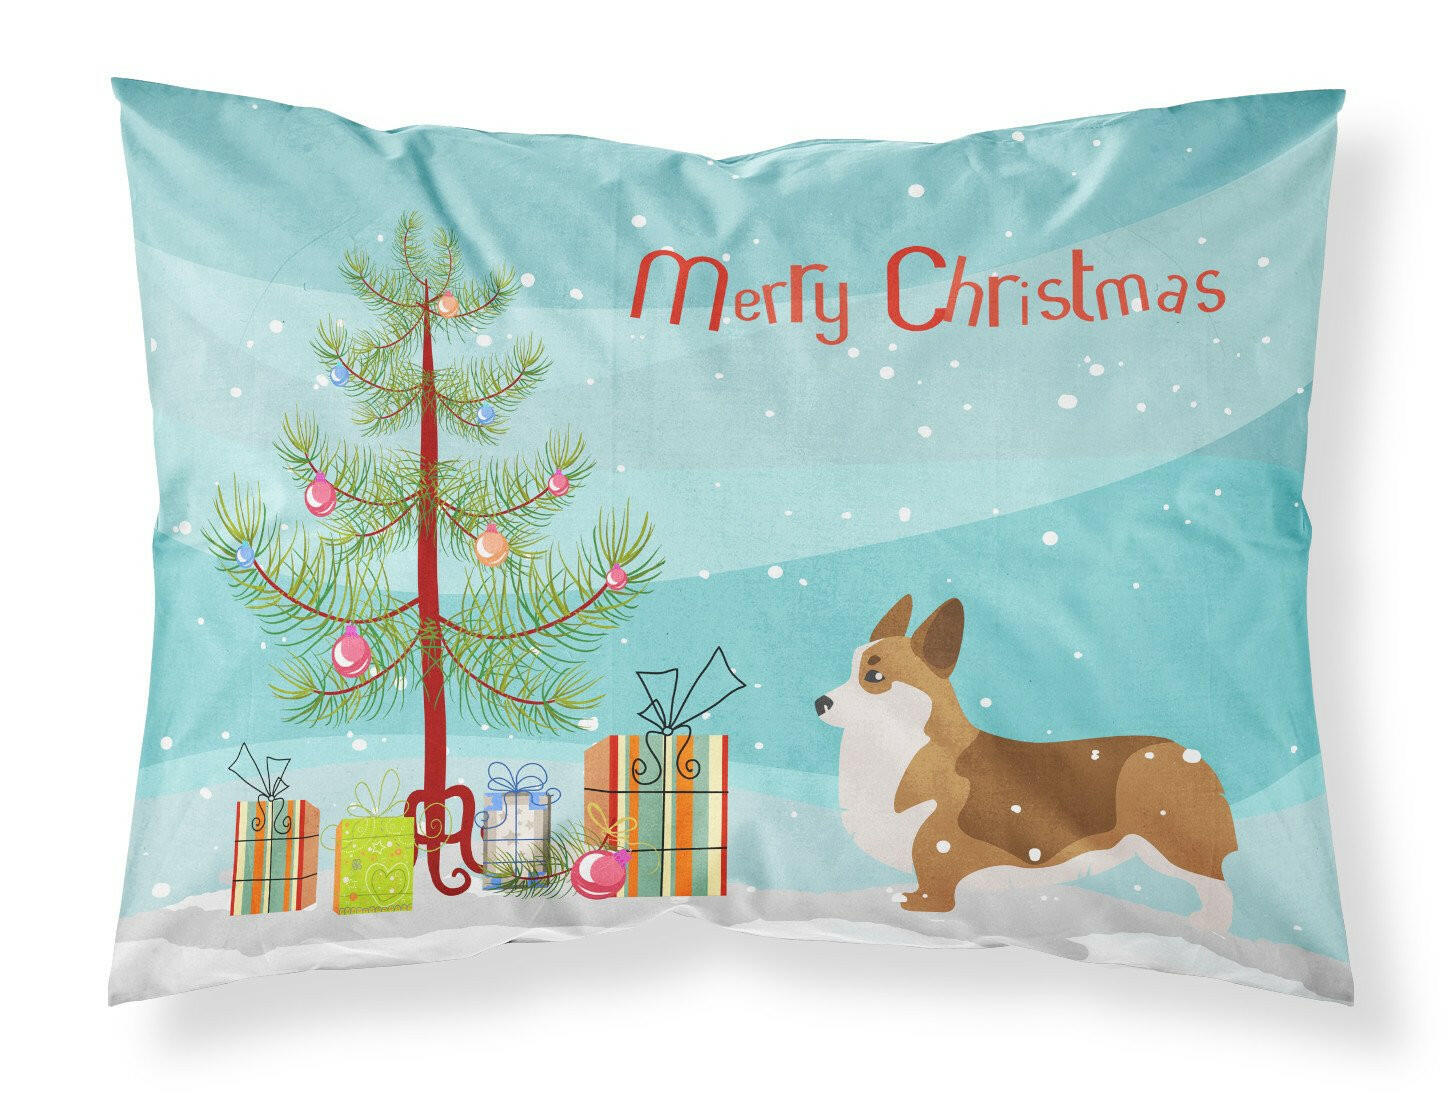 Corgi Merry Christmas Tree Fabric Standard Pillowcase BB2938PILLOWCASE by Caroline's Treasures